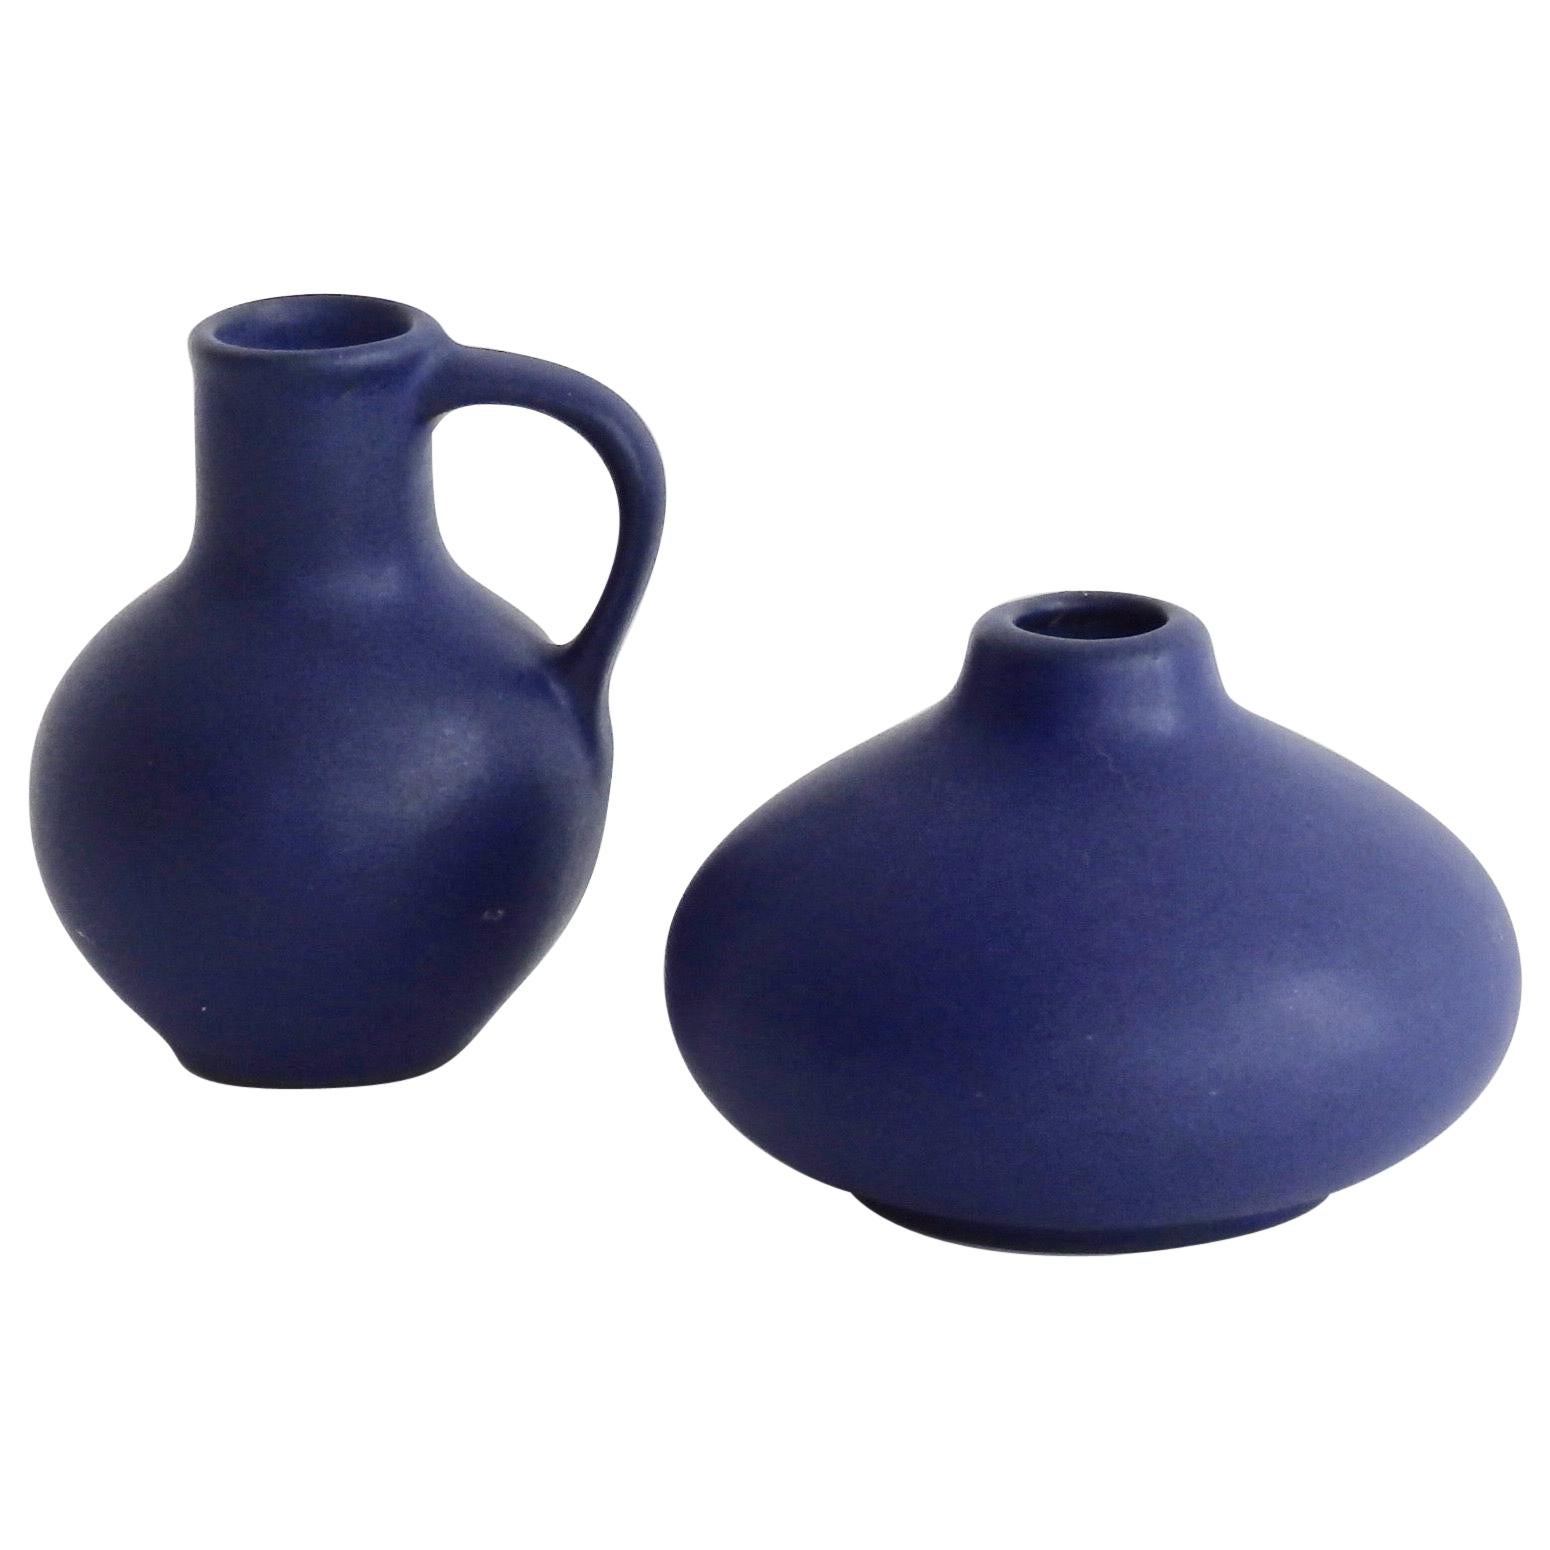 Pair of Diminutive Matte Cobalt Blue West German Pottery Vessels